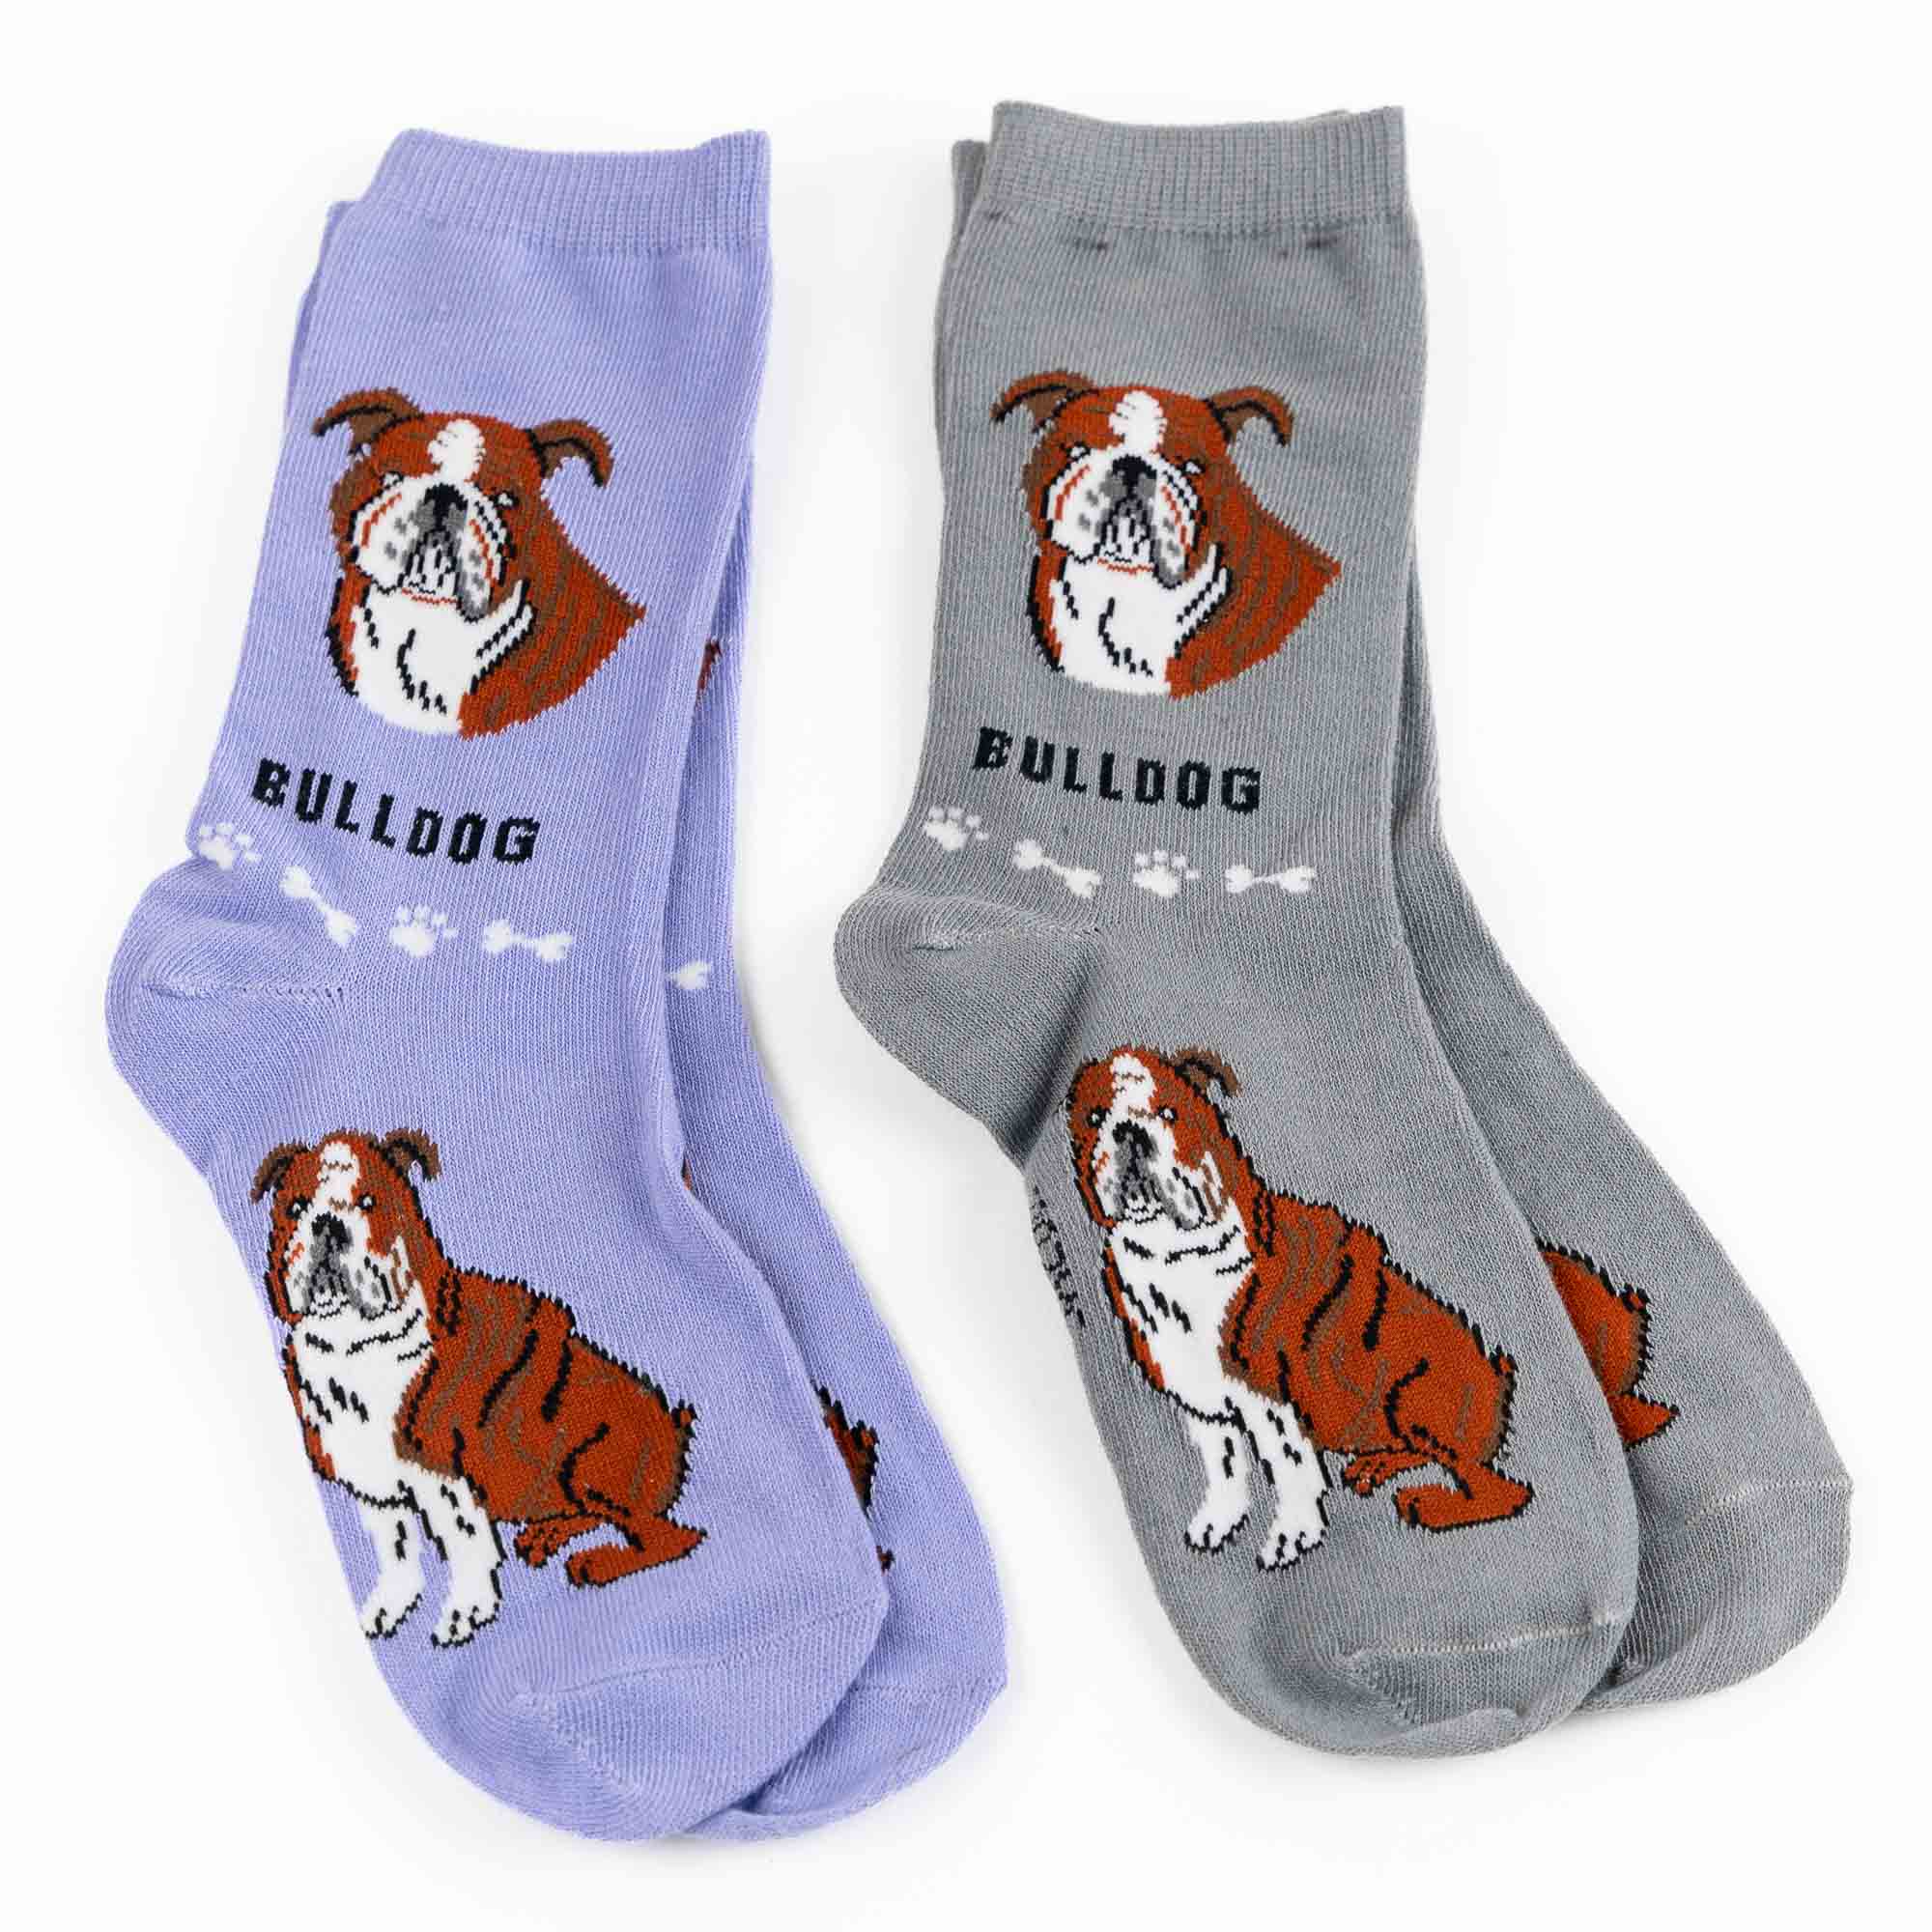 My Favorite Dog Breed Socks ❤️ Bulldog Breed Dog Sock - 2 Set Collection